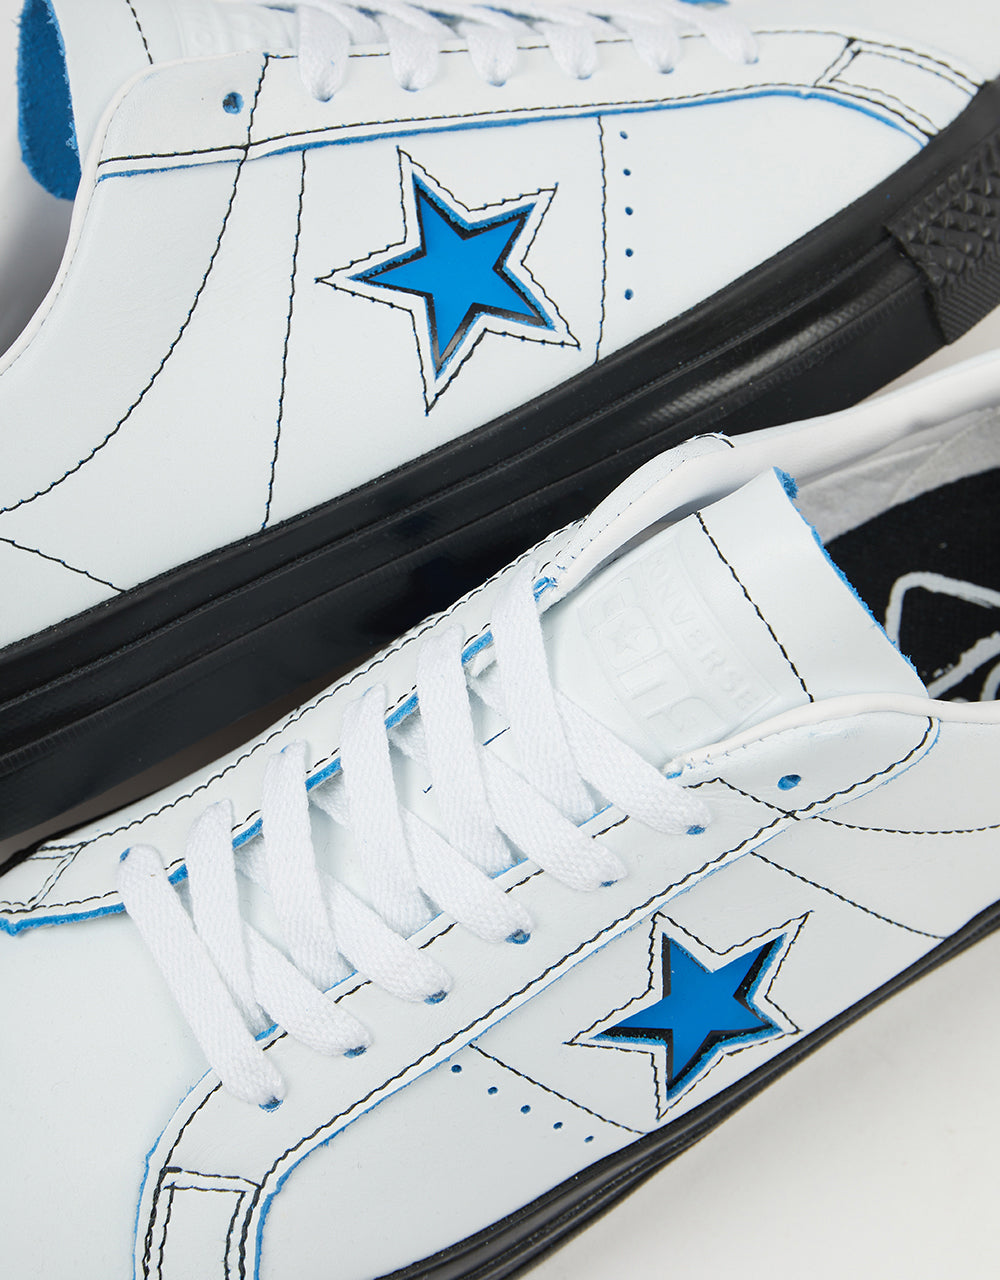 Converse x Eddie Cernicky One Star Pro Ox Skate Shoes - White/Black/Kinetic Blue